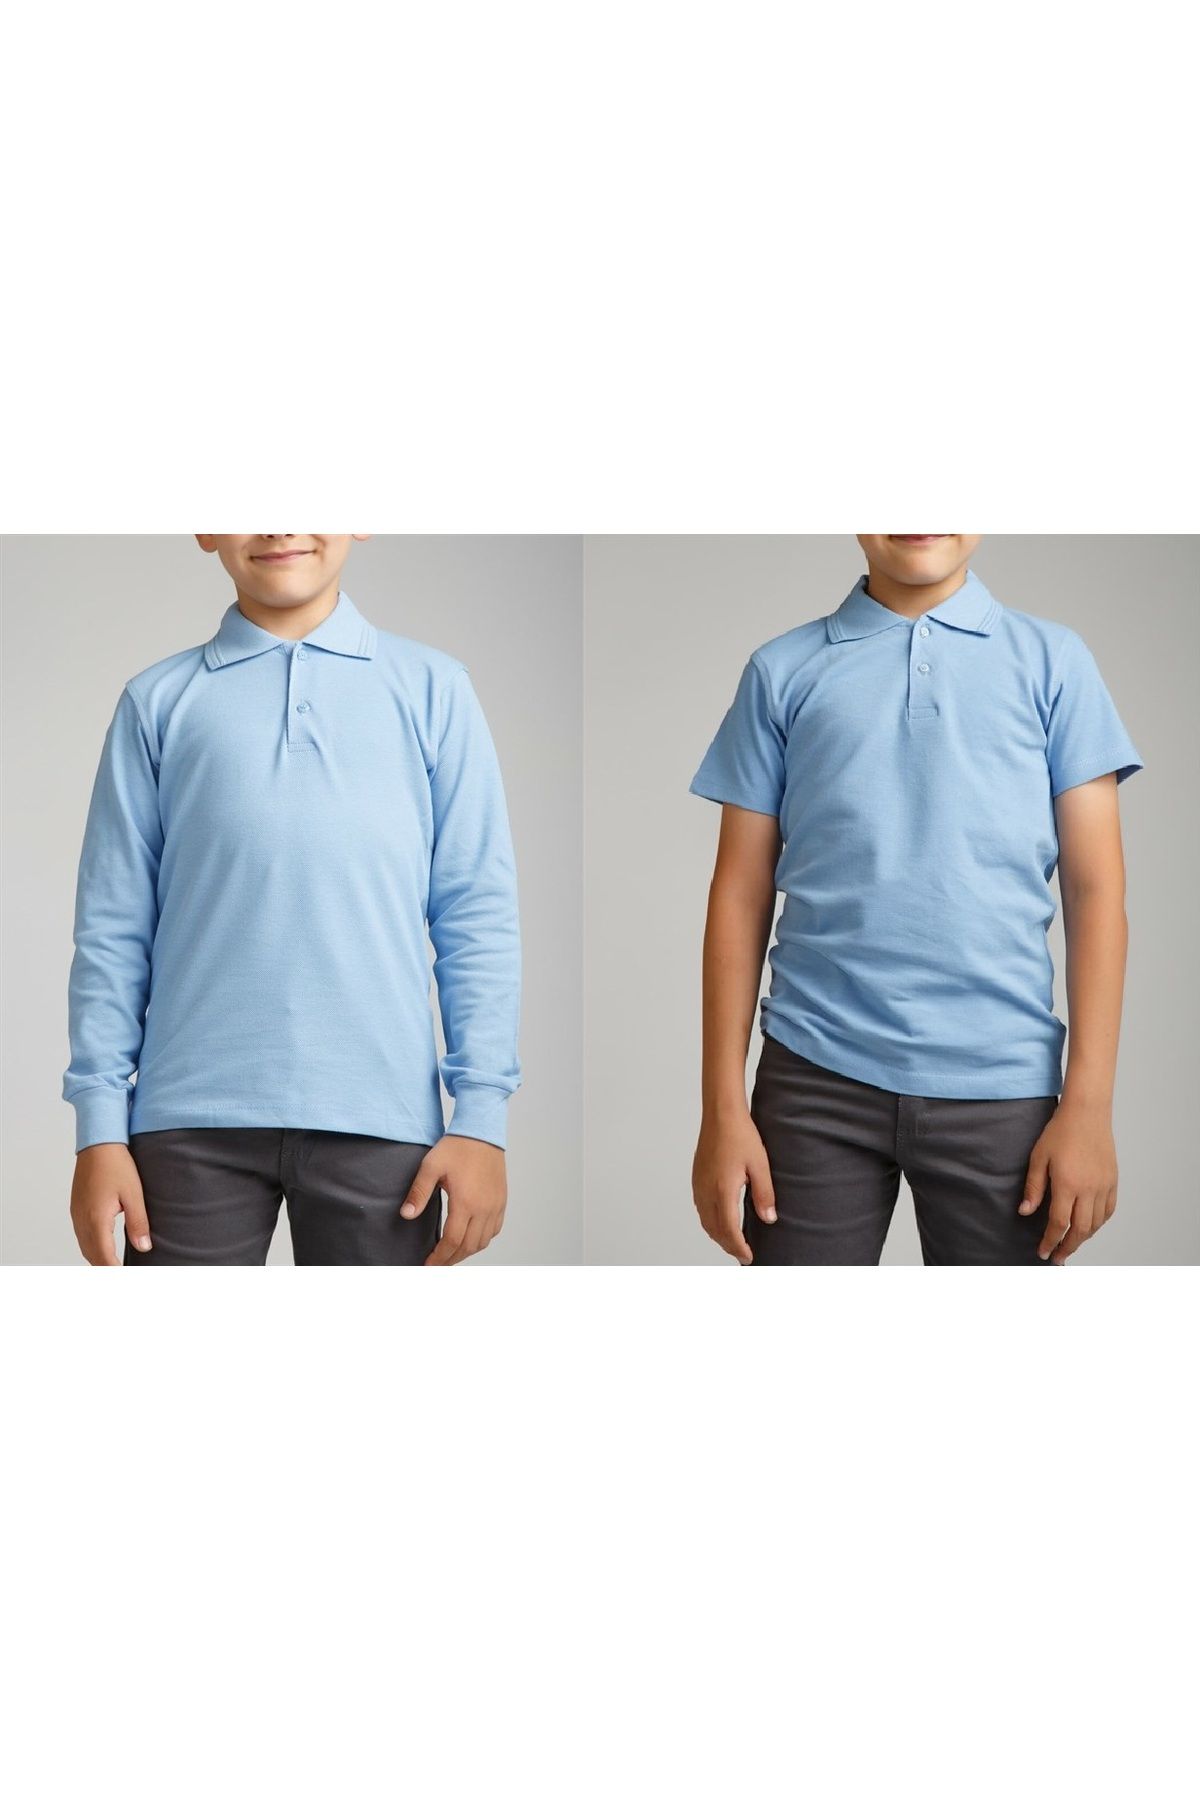 FATELLA Unısex Çocuk Kısa - Uzun Kol Normal Kalıp Polo Yaka Düz Renk Okul Penye Lakost T-shirt 2'li Paket